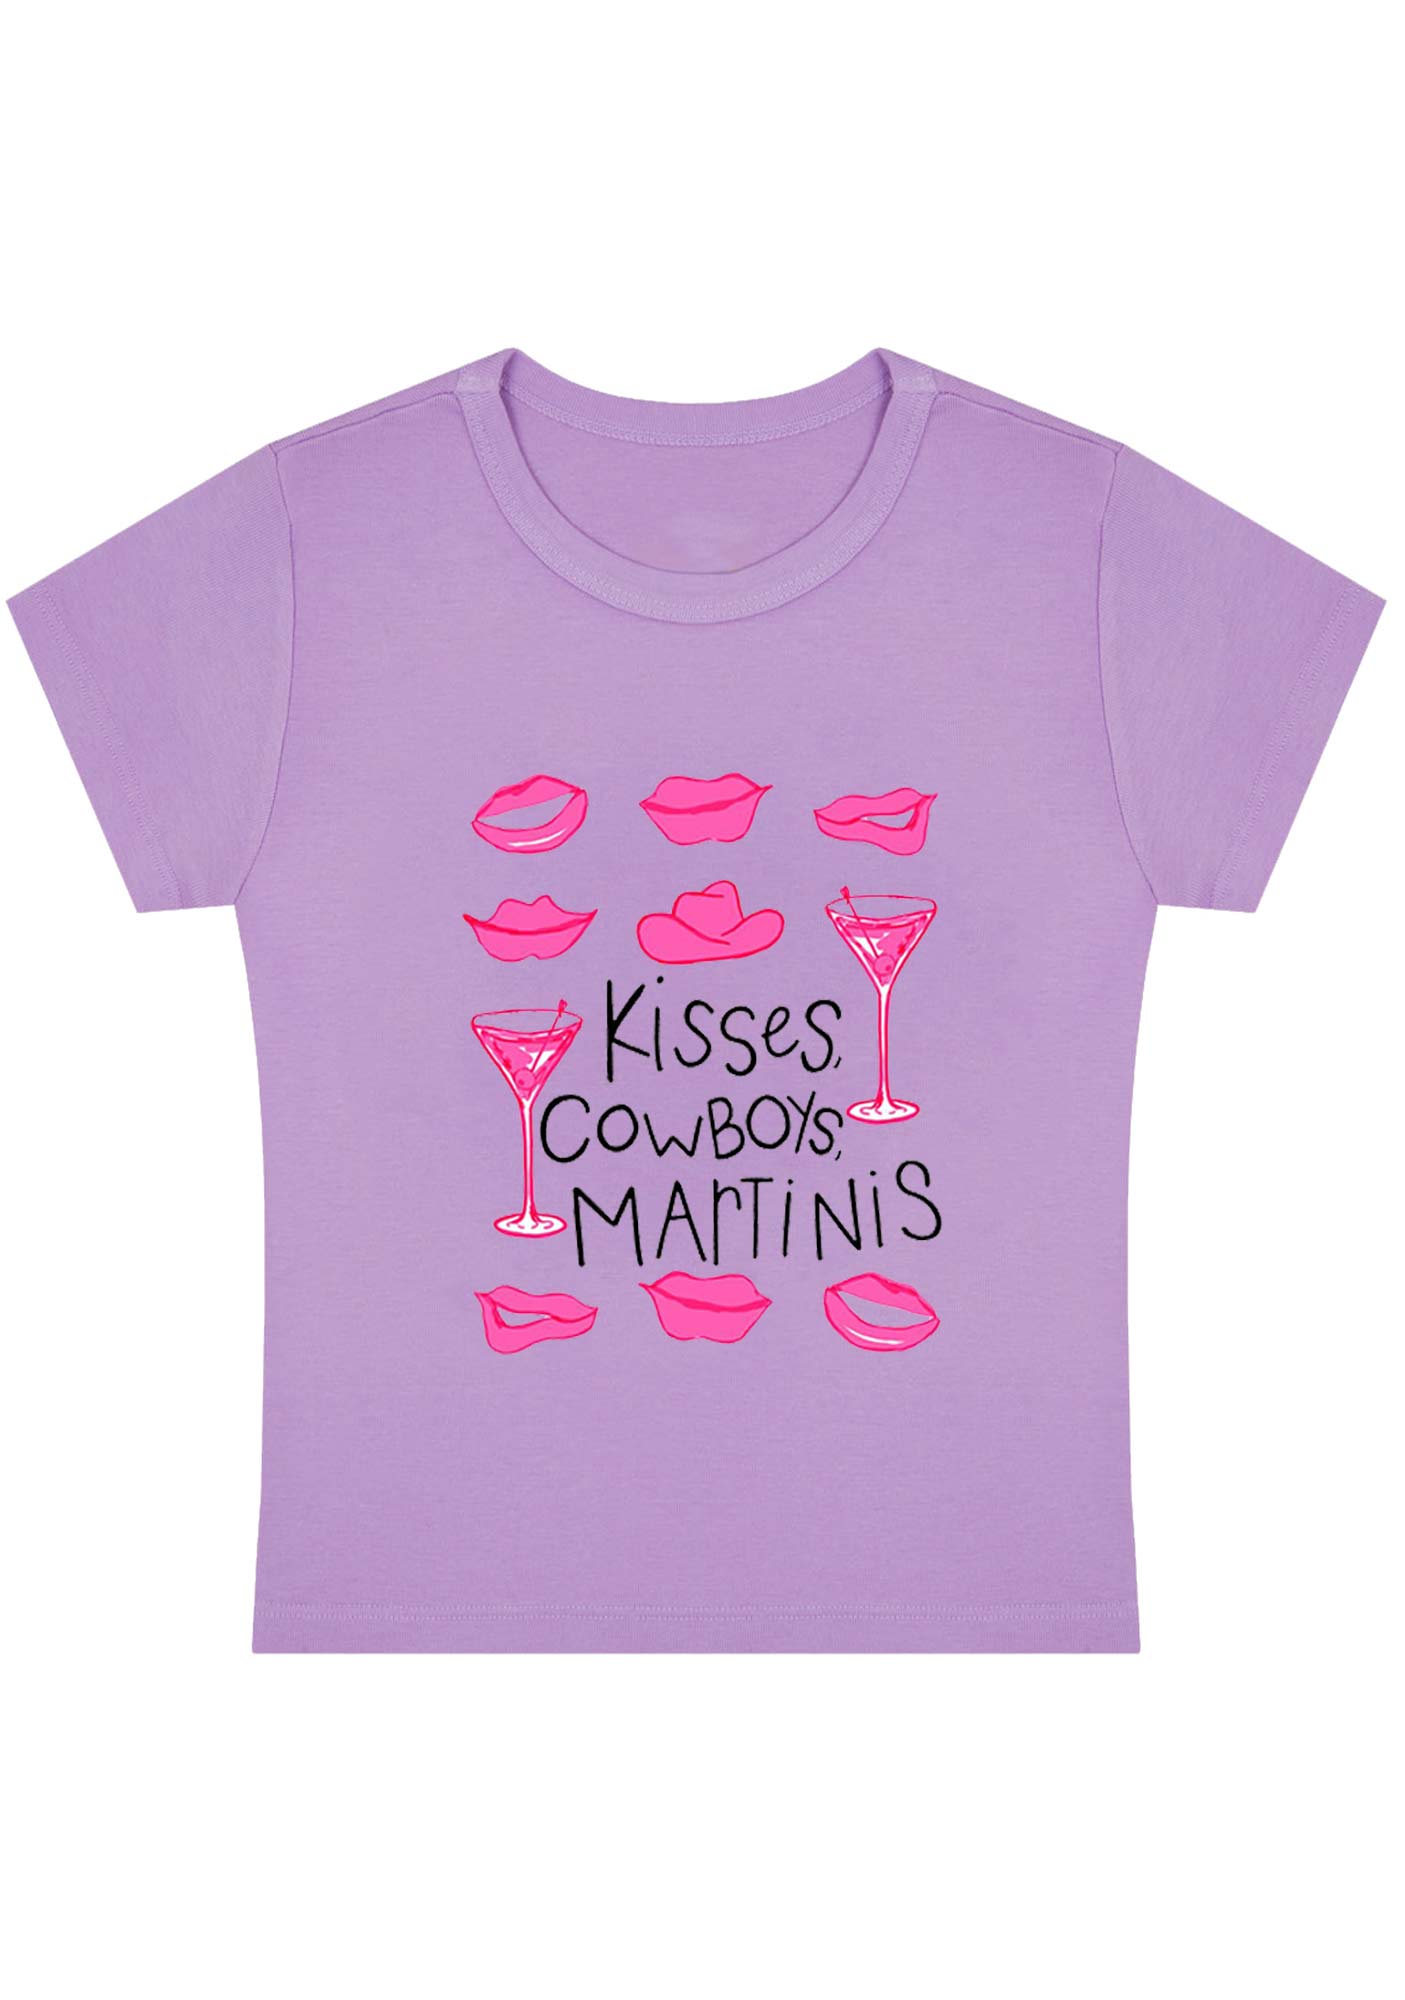 Kisses Cowboys Martinis Y2K Baby Tee